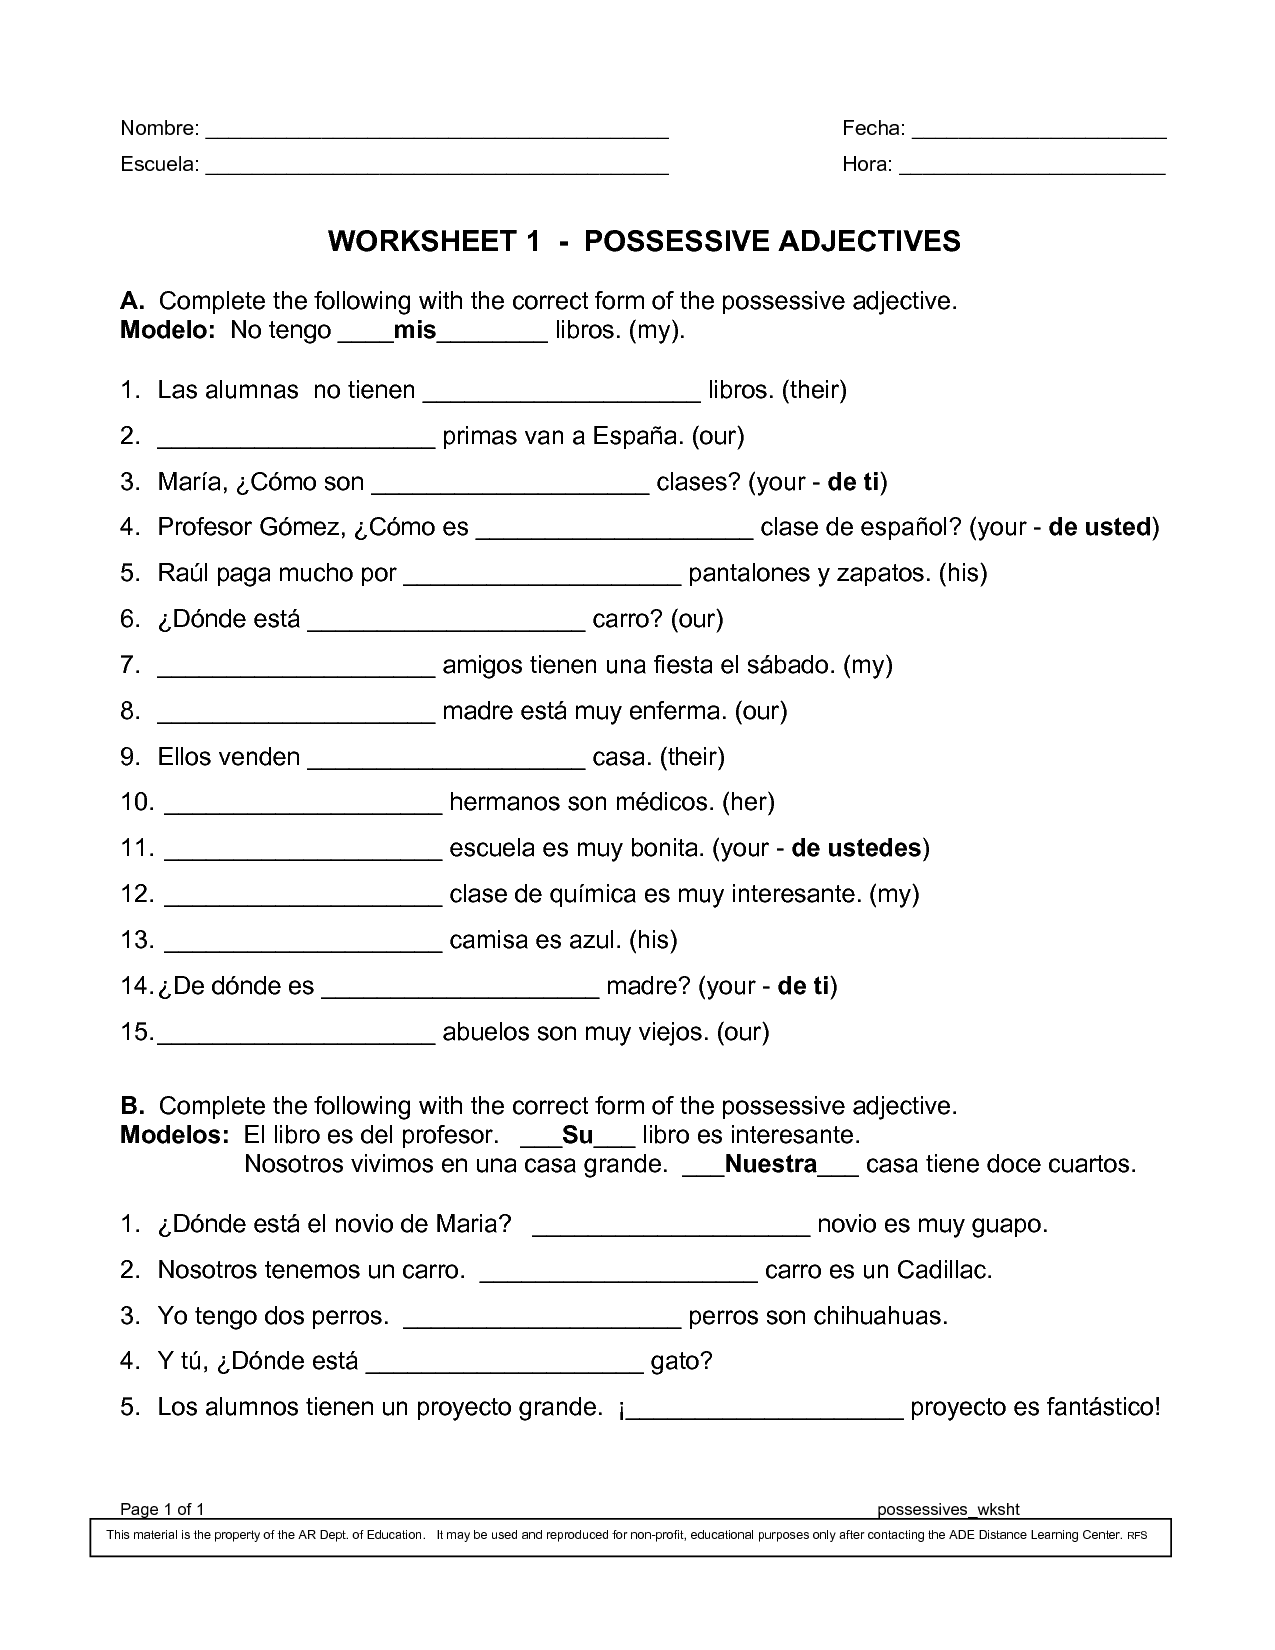 Spanish Possessive Pronouns And Adjectives Worksheet